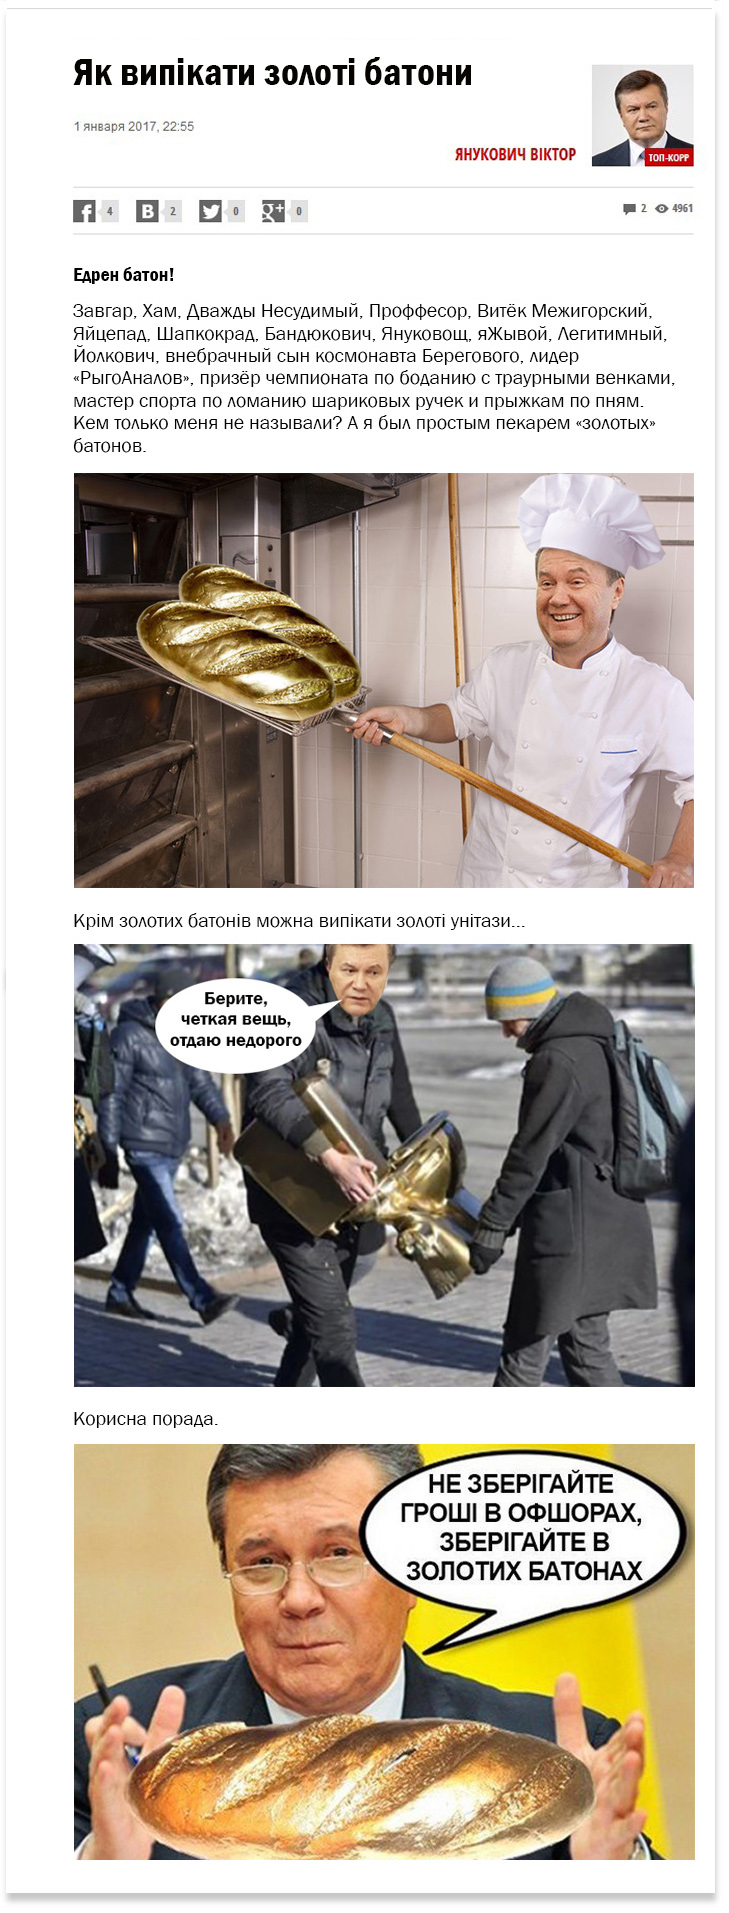 Як спекти золотий батон: блог Януковича у ФОТОЖАБАХ - фото 1